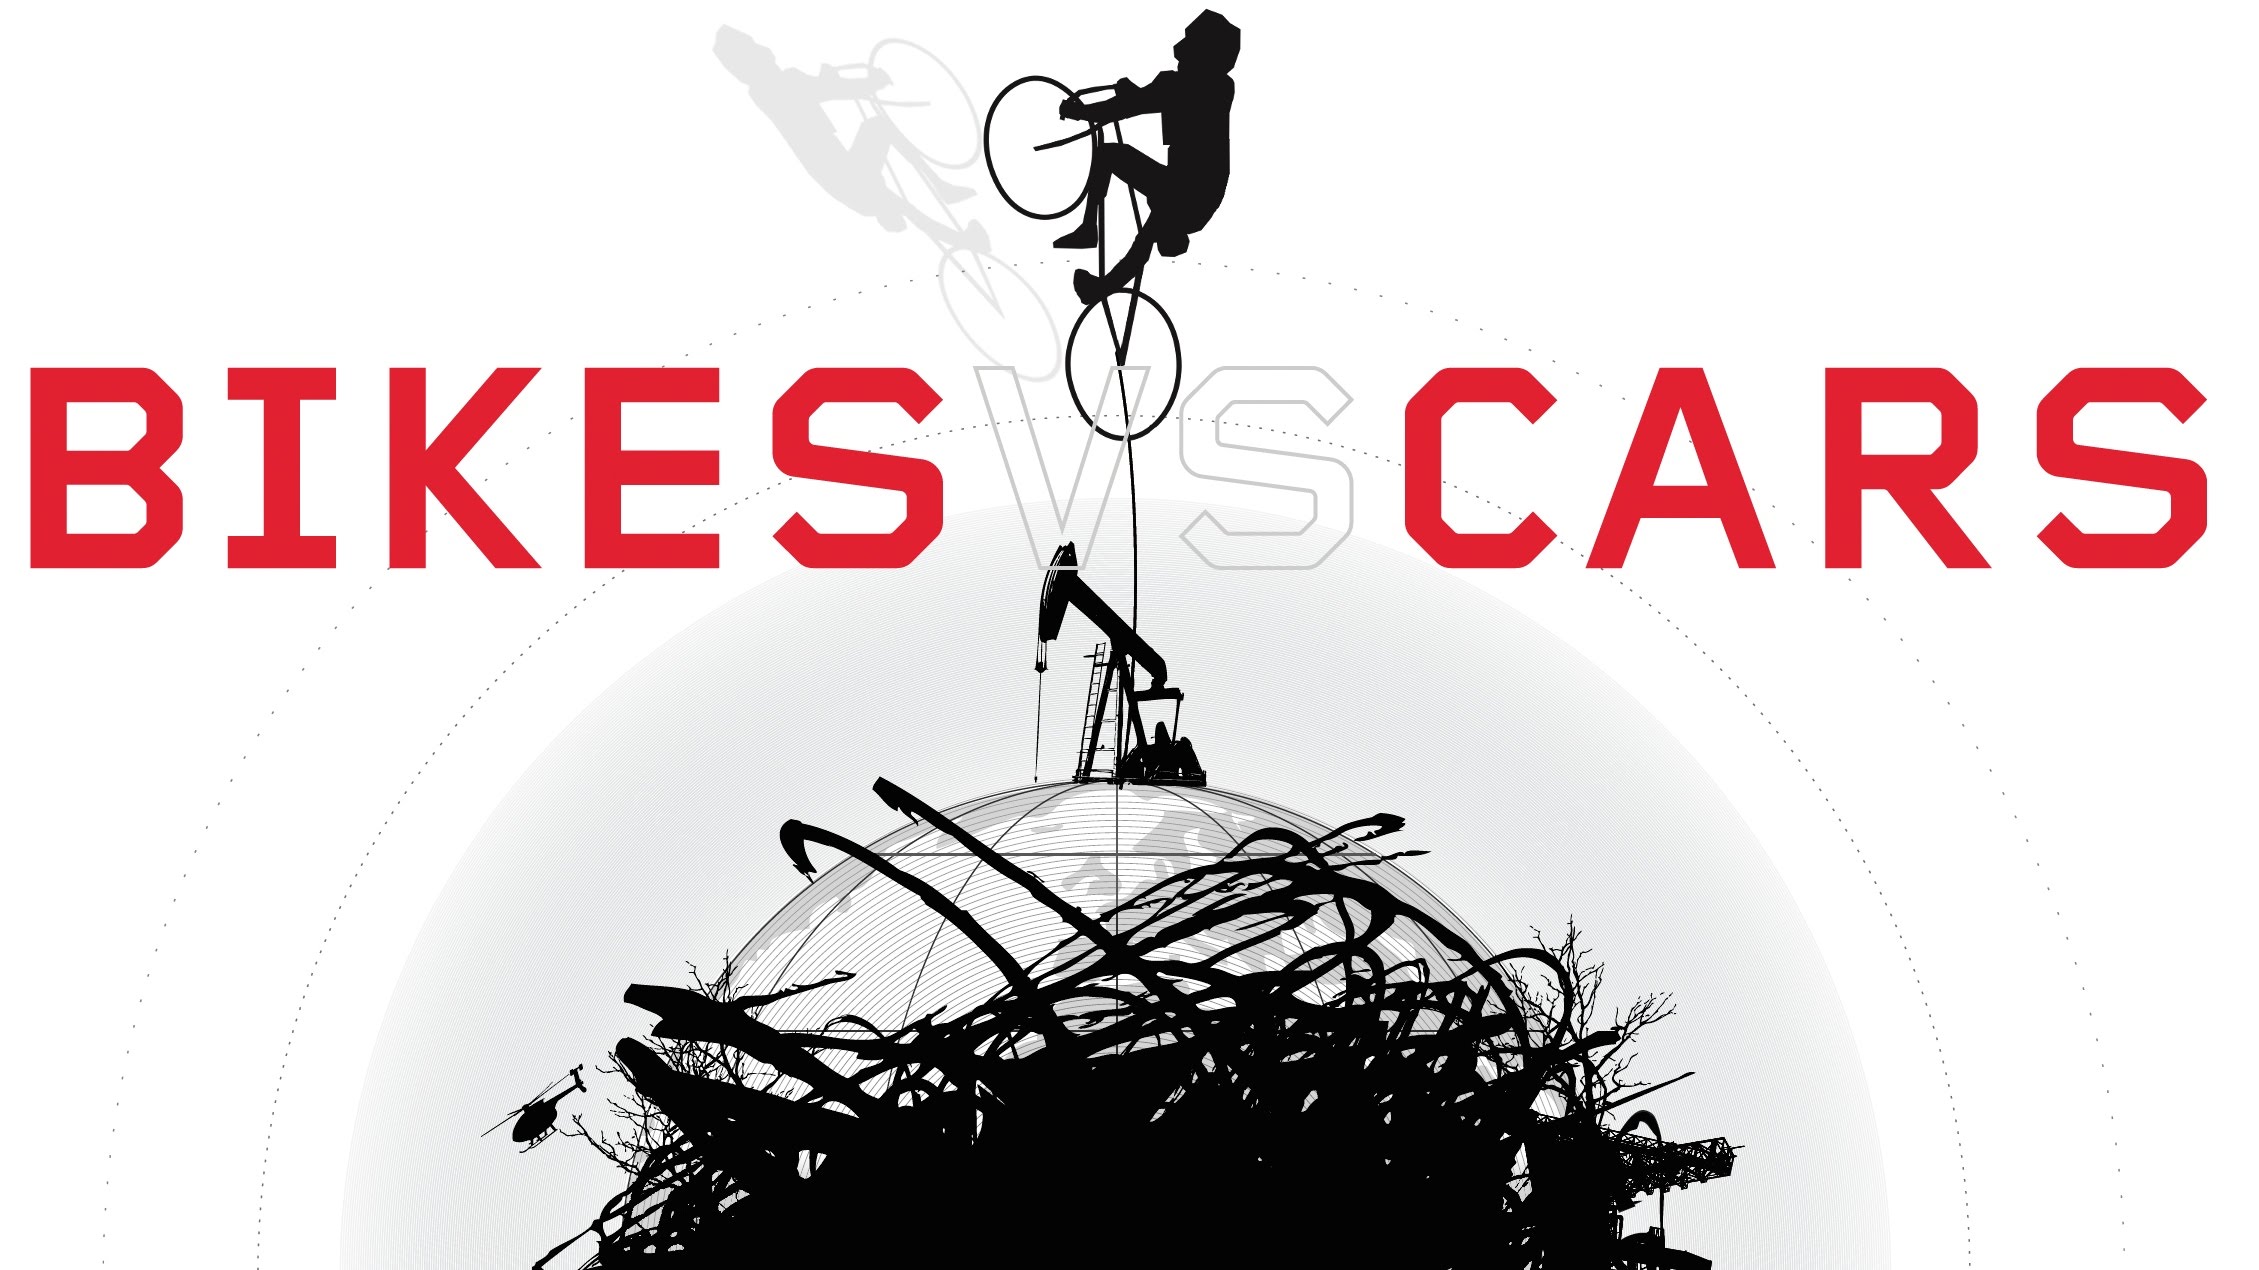 Superbe documentaire vidéo Bikes vs Cars